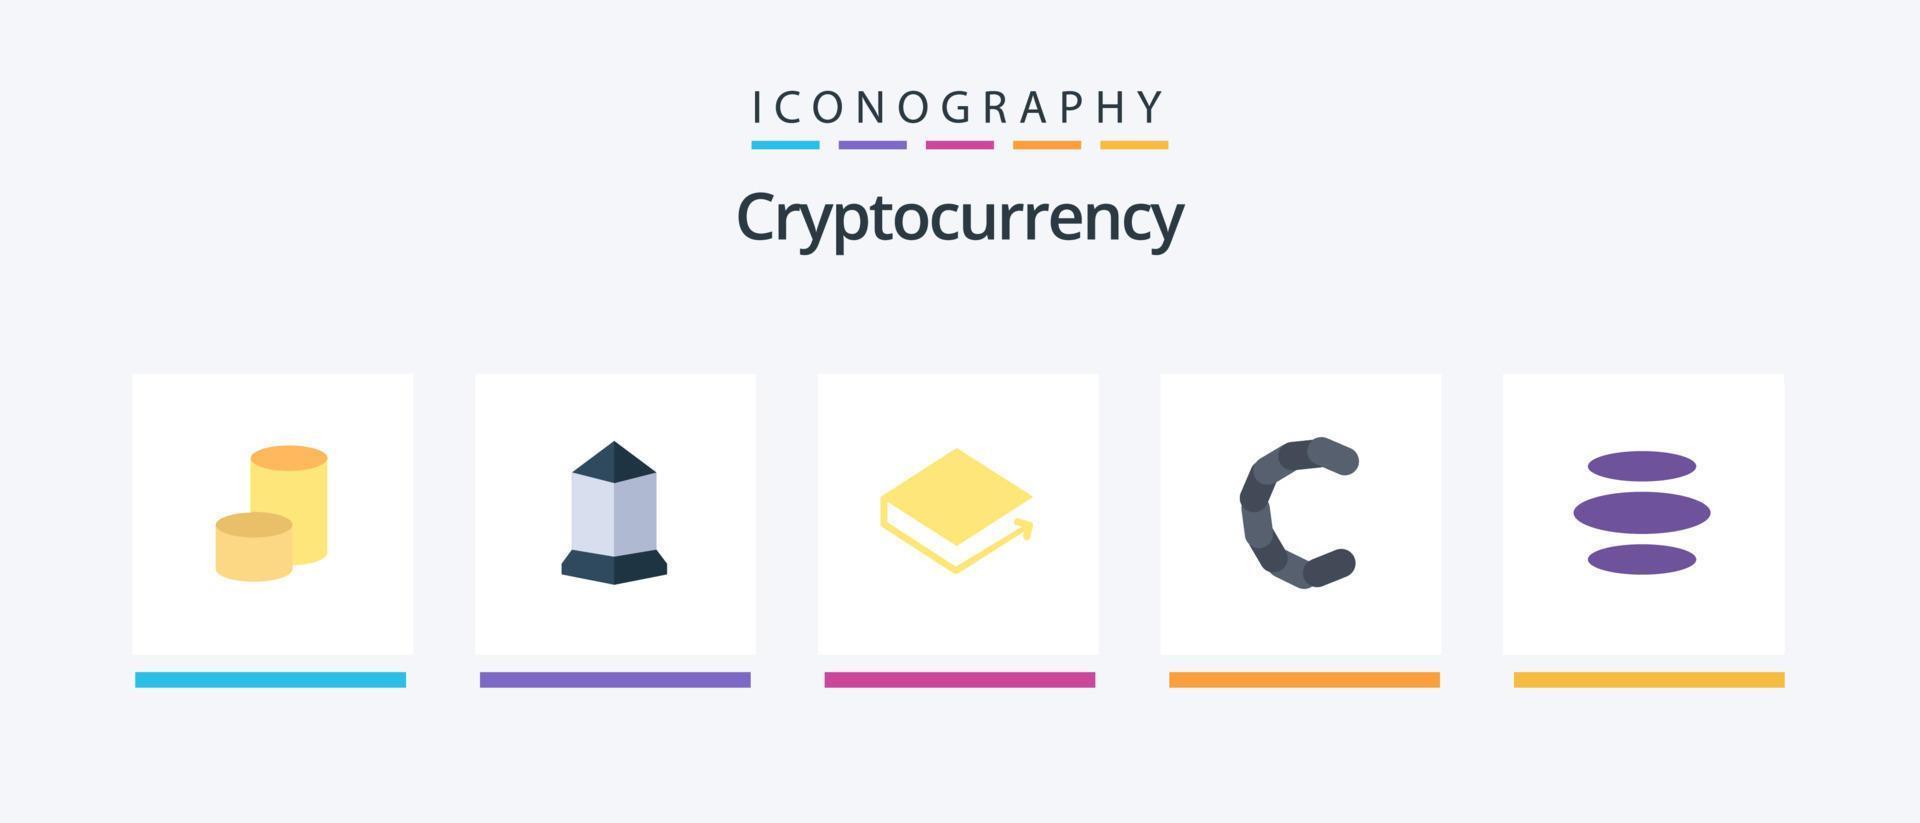 cryptogeld vlak 5 icoon pak inclusief munt. crypto munteenheid. munt. cryptovaluta. keten munt. creatief pictogrammen ontwerp vector